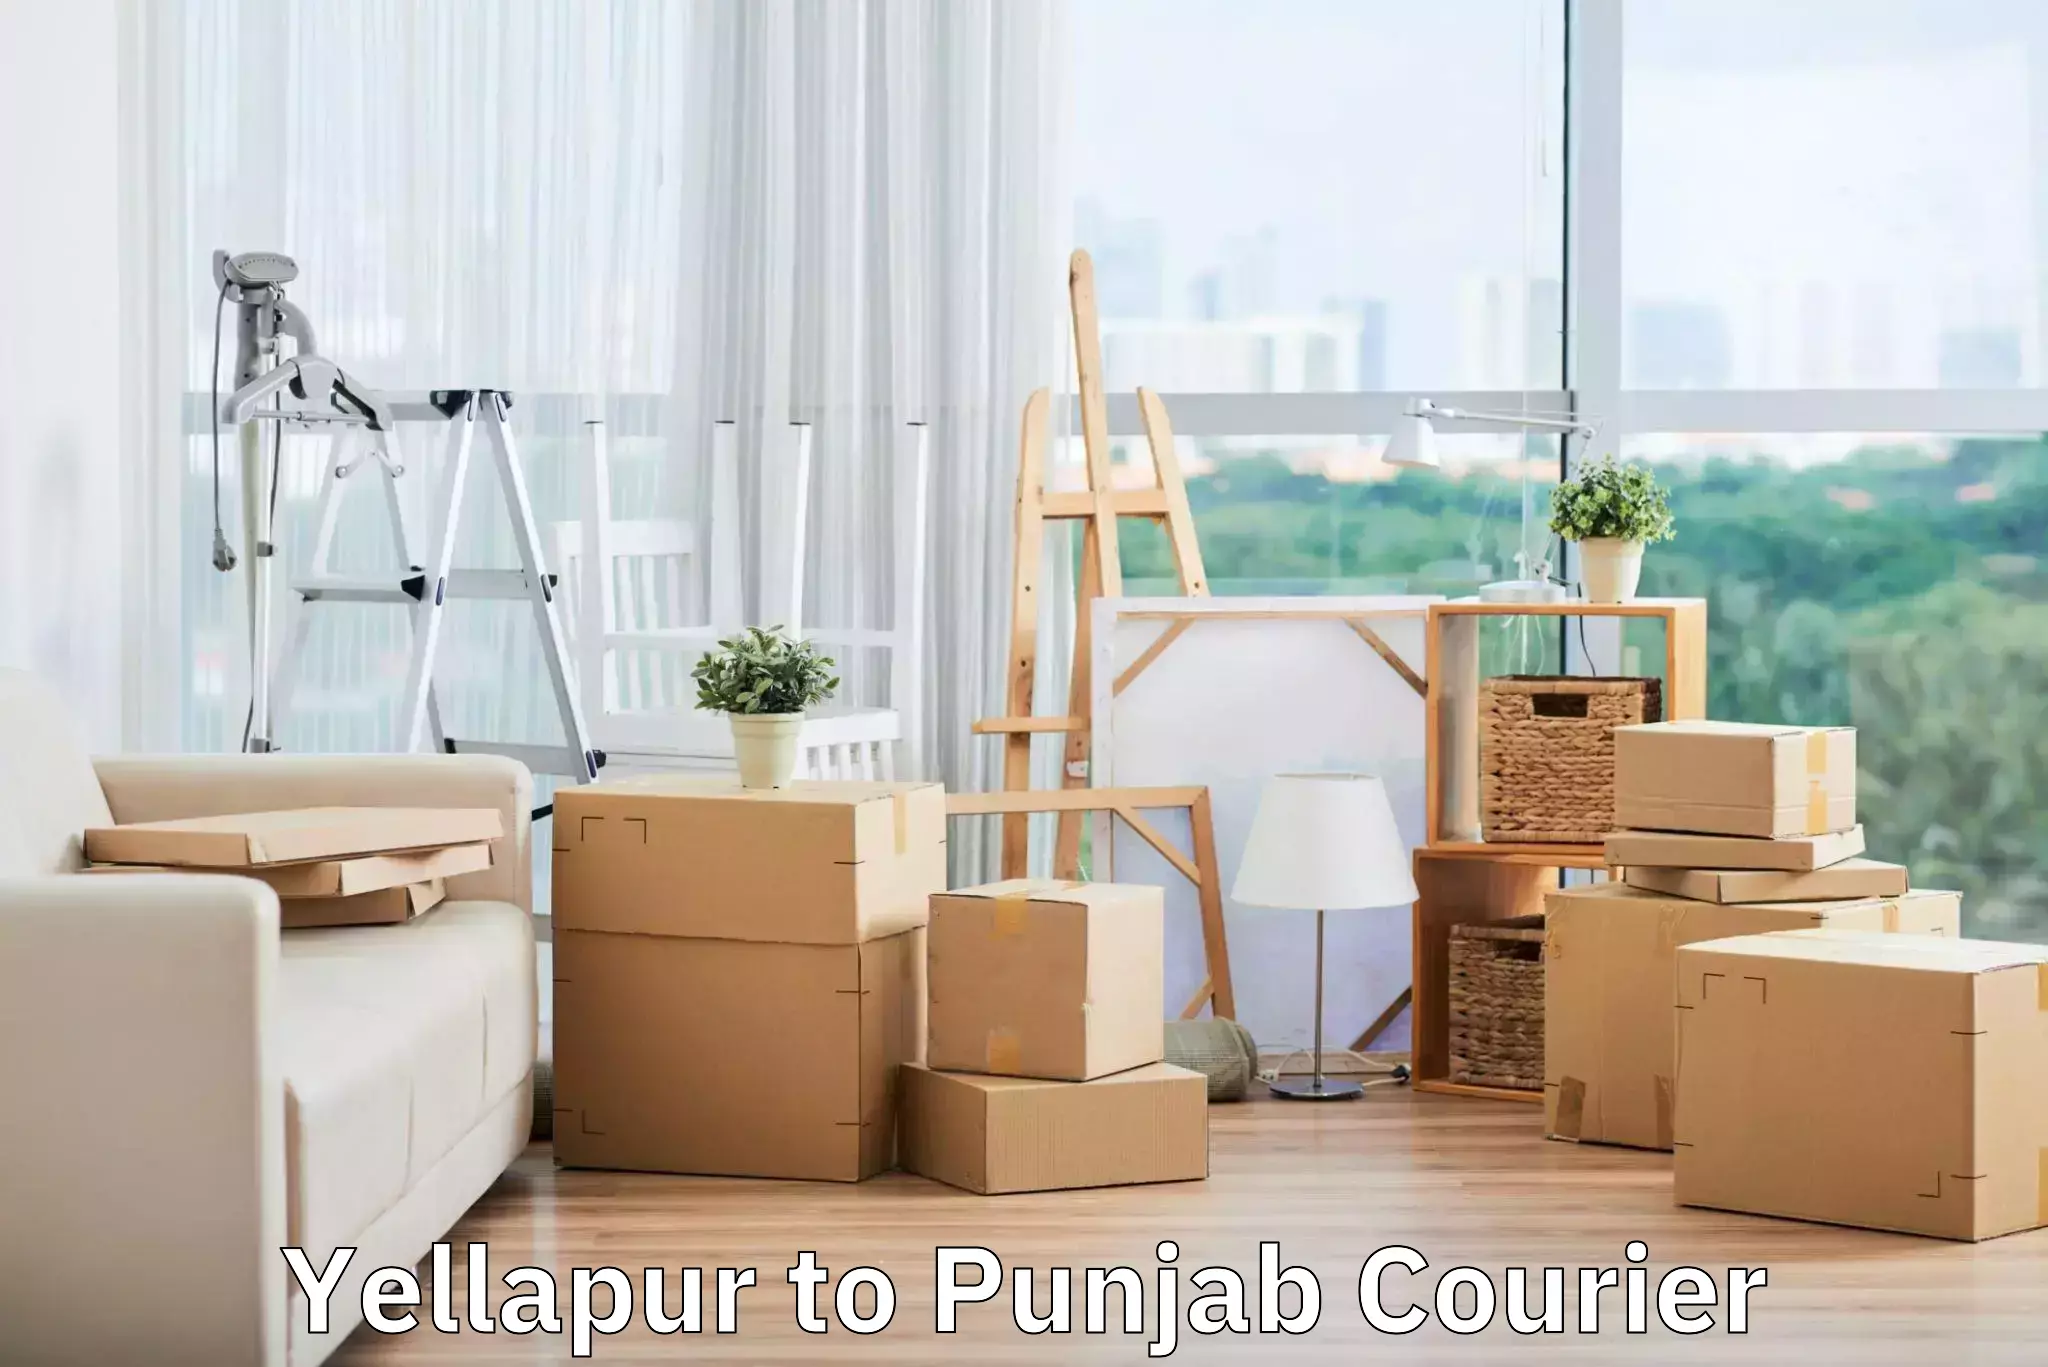 Luggage transport company Yellapur to Punjab